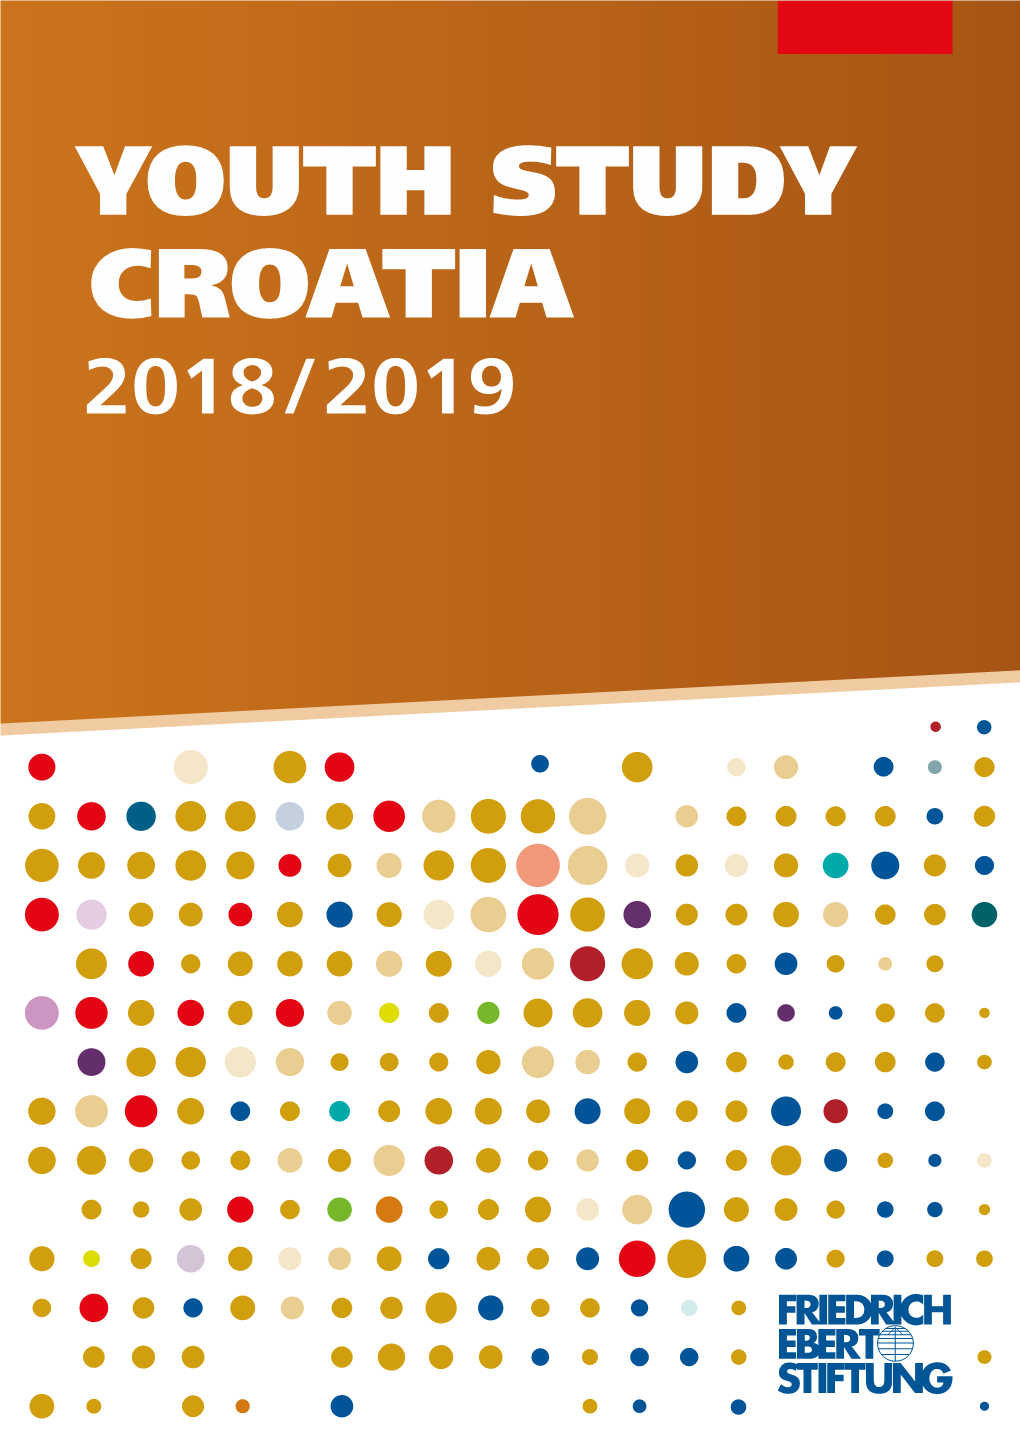 Youth Study Croatia 2018 / 2019 2 Youth Study Croatia 2018/2019